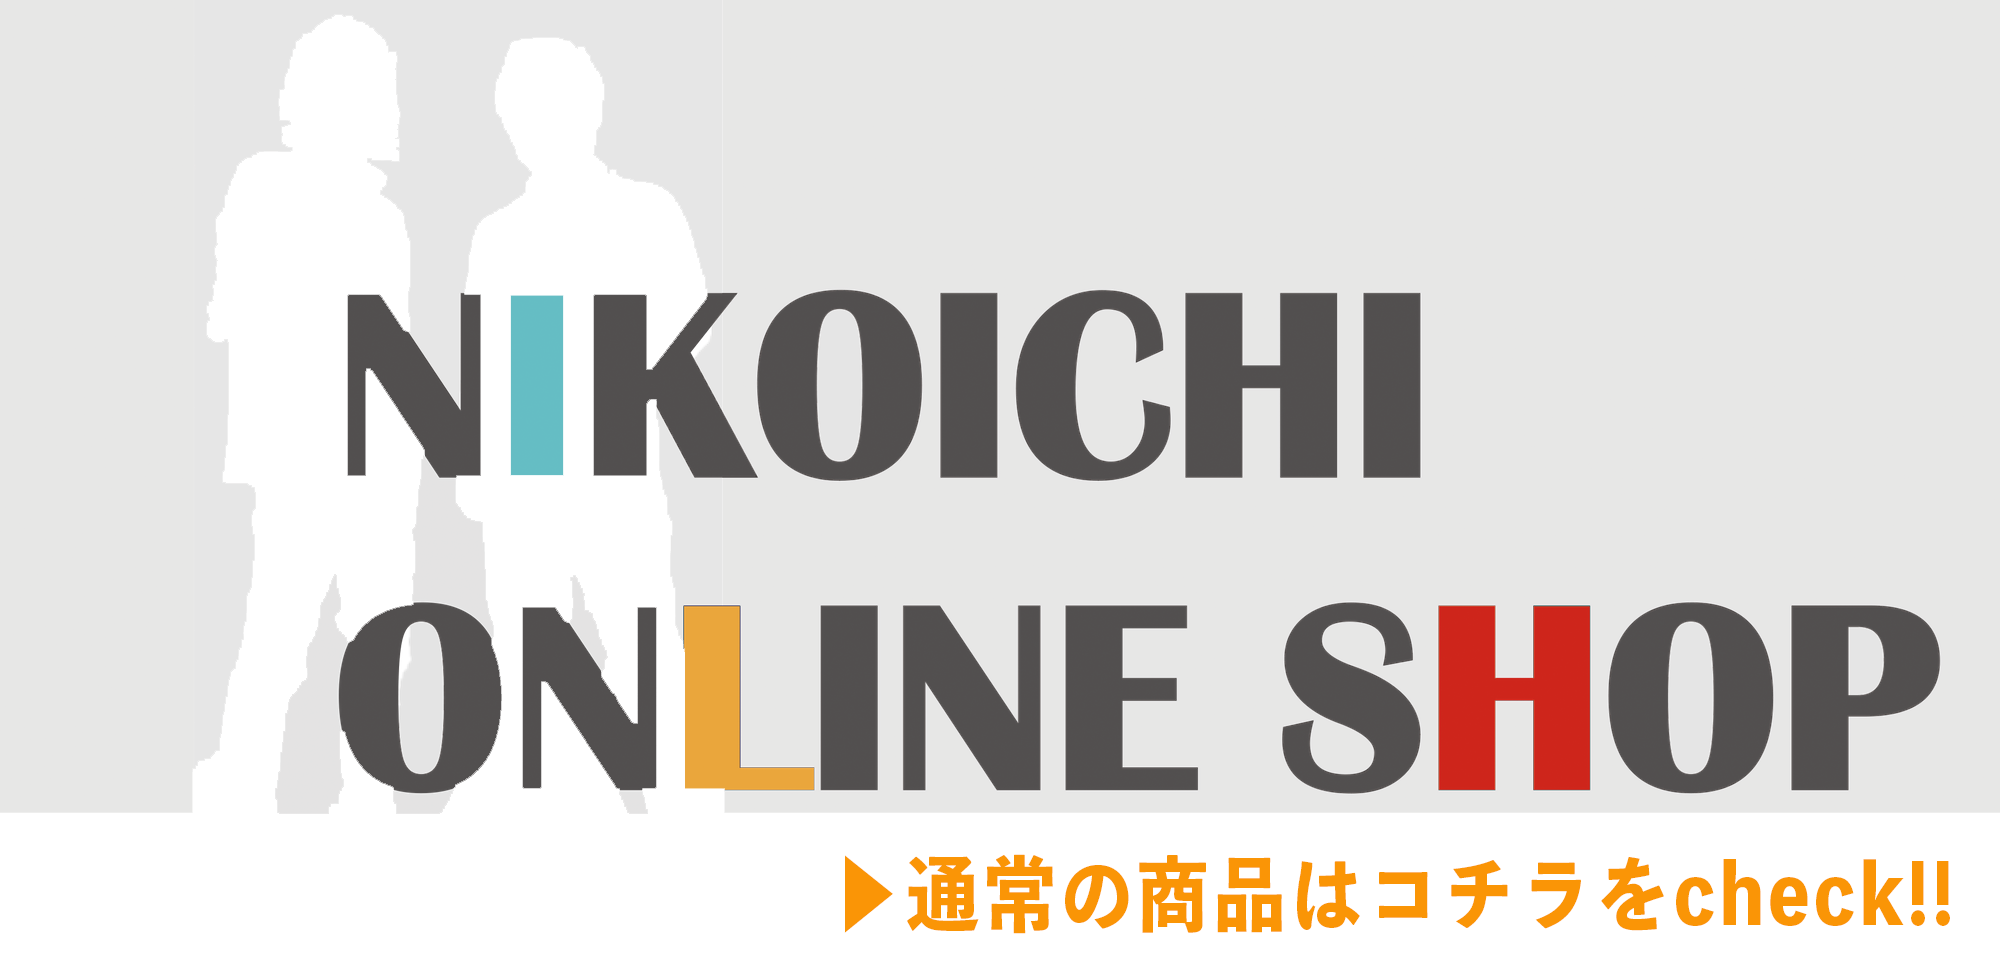 online shop logo.bana